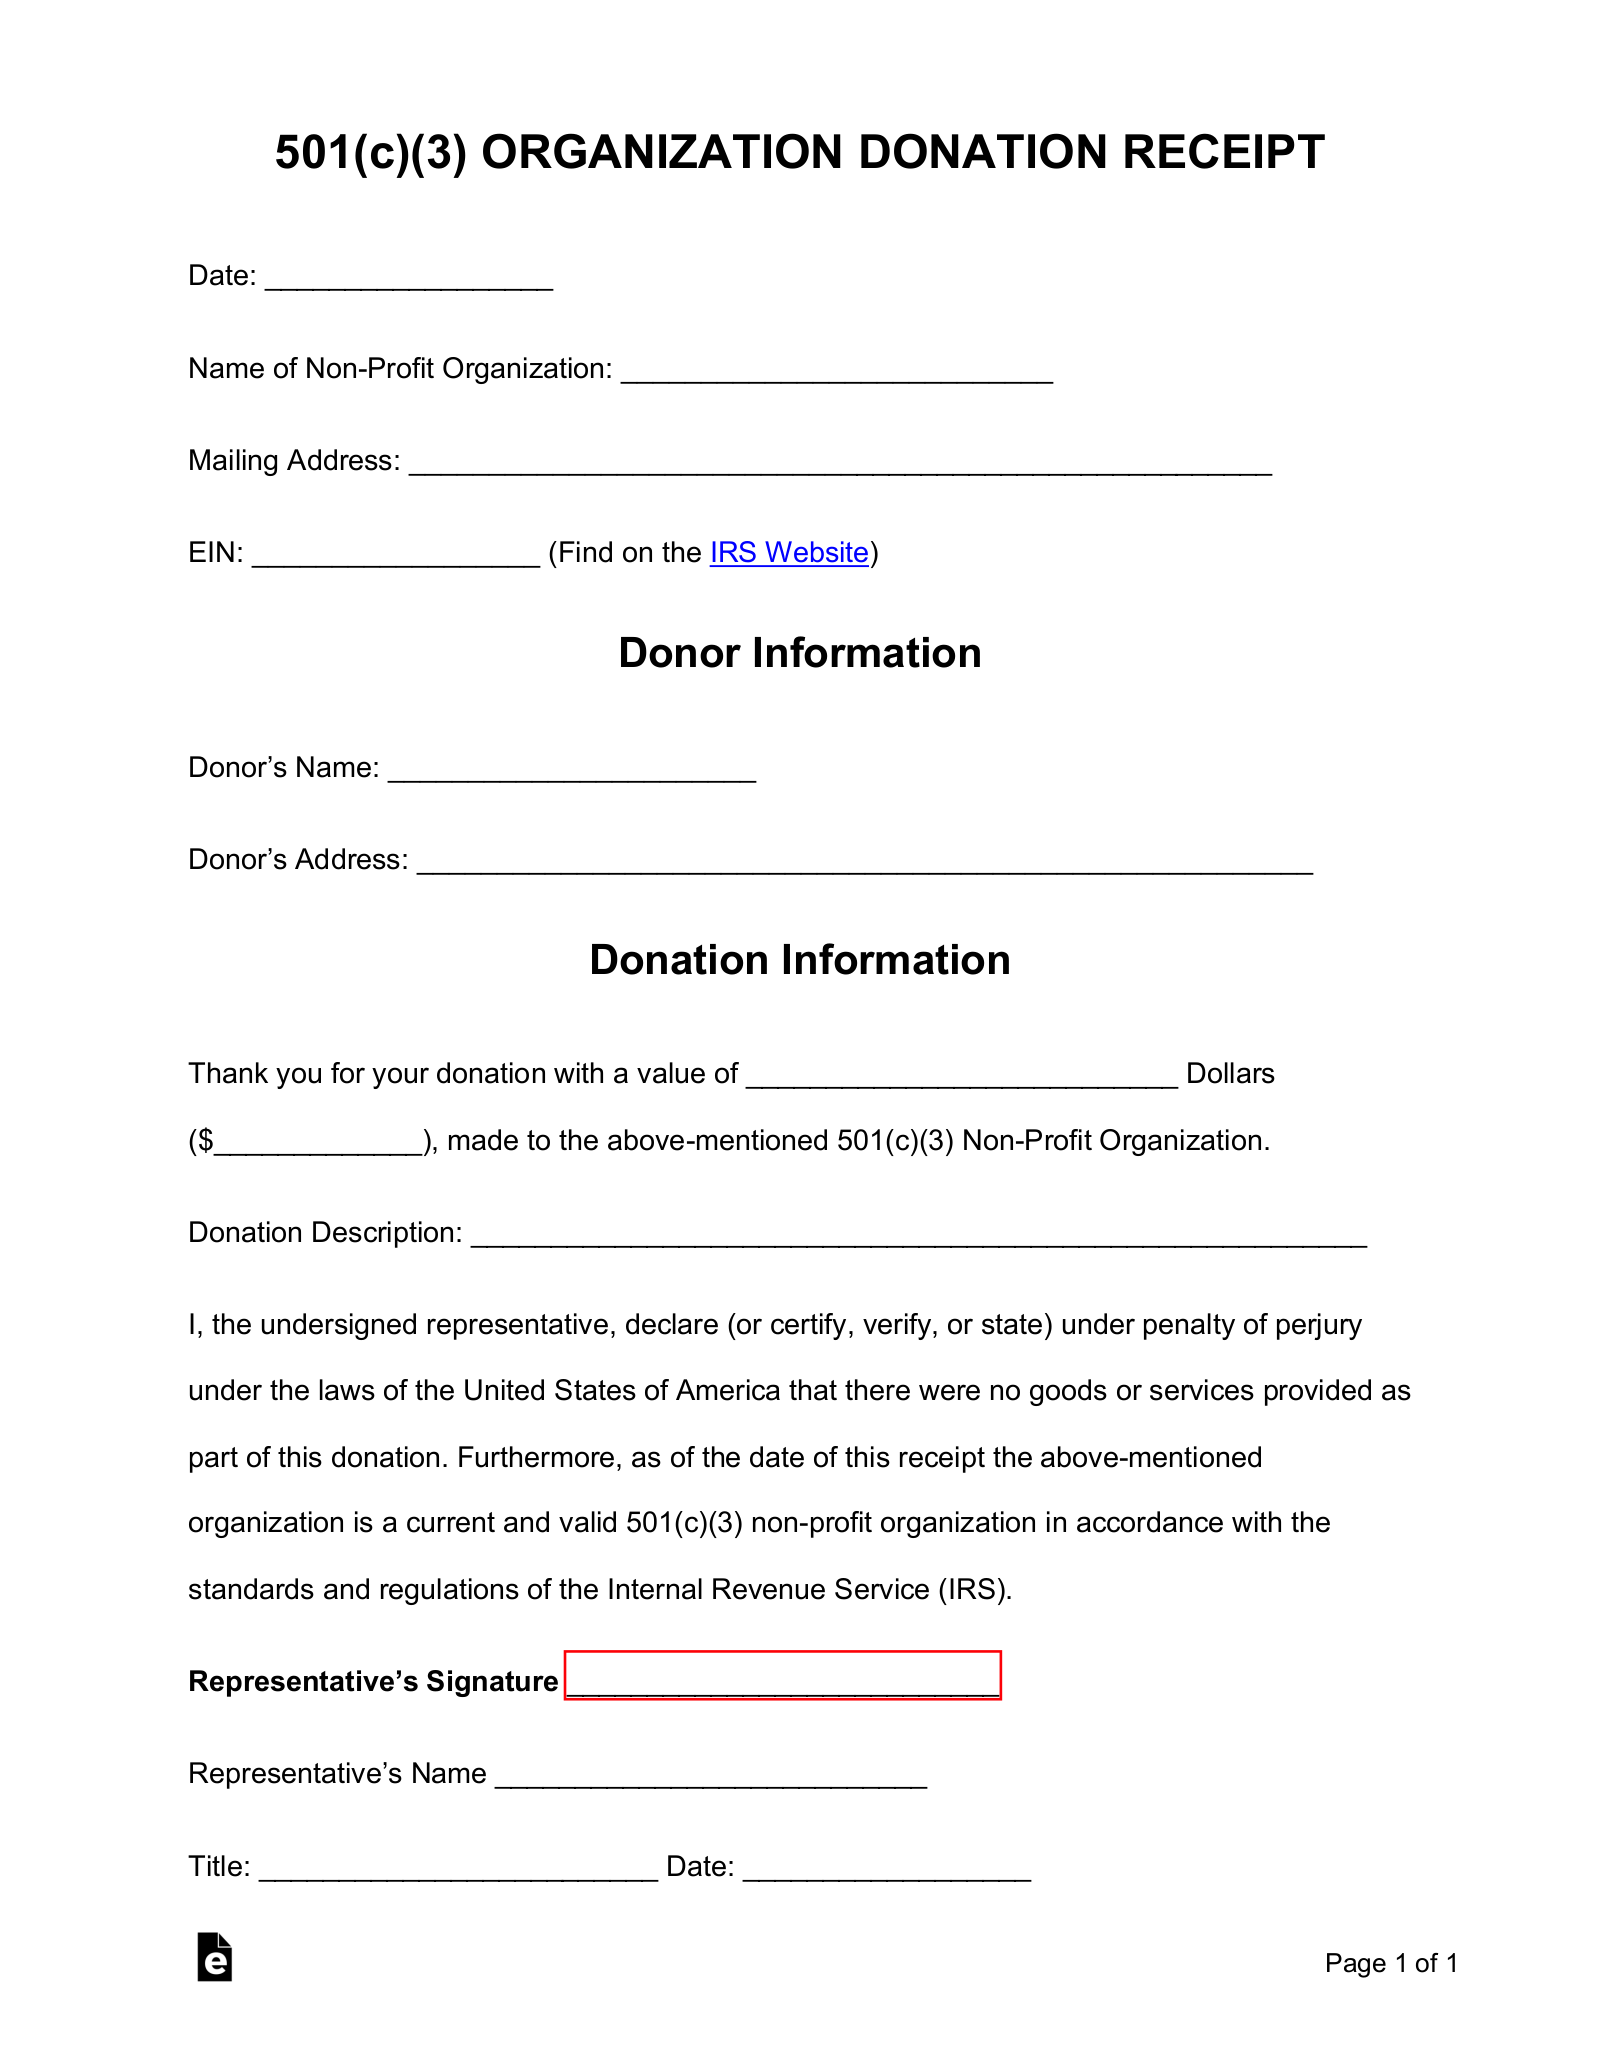 501(c)(3) Donation Receipt Template | Sample